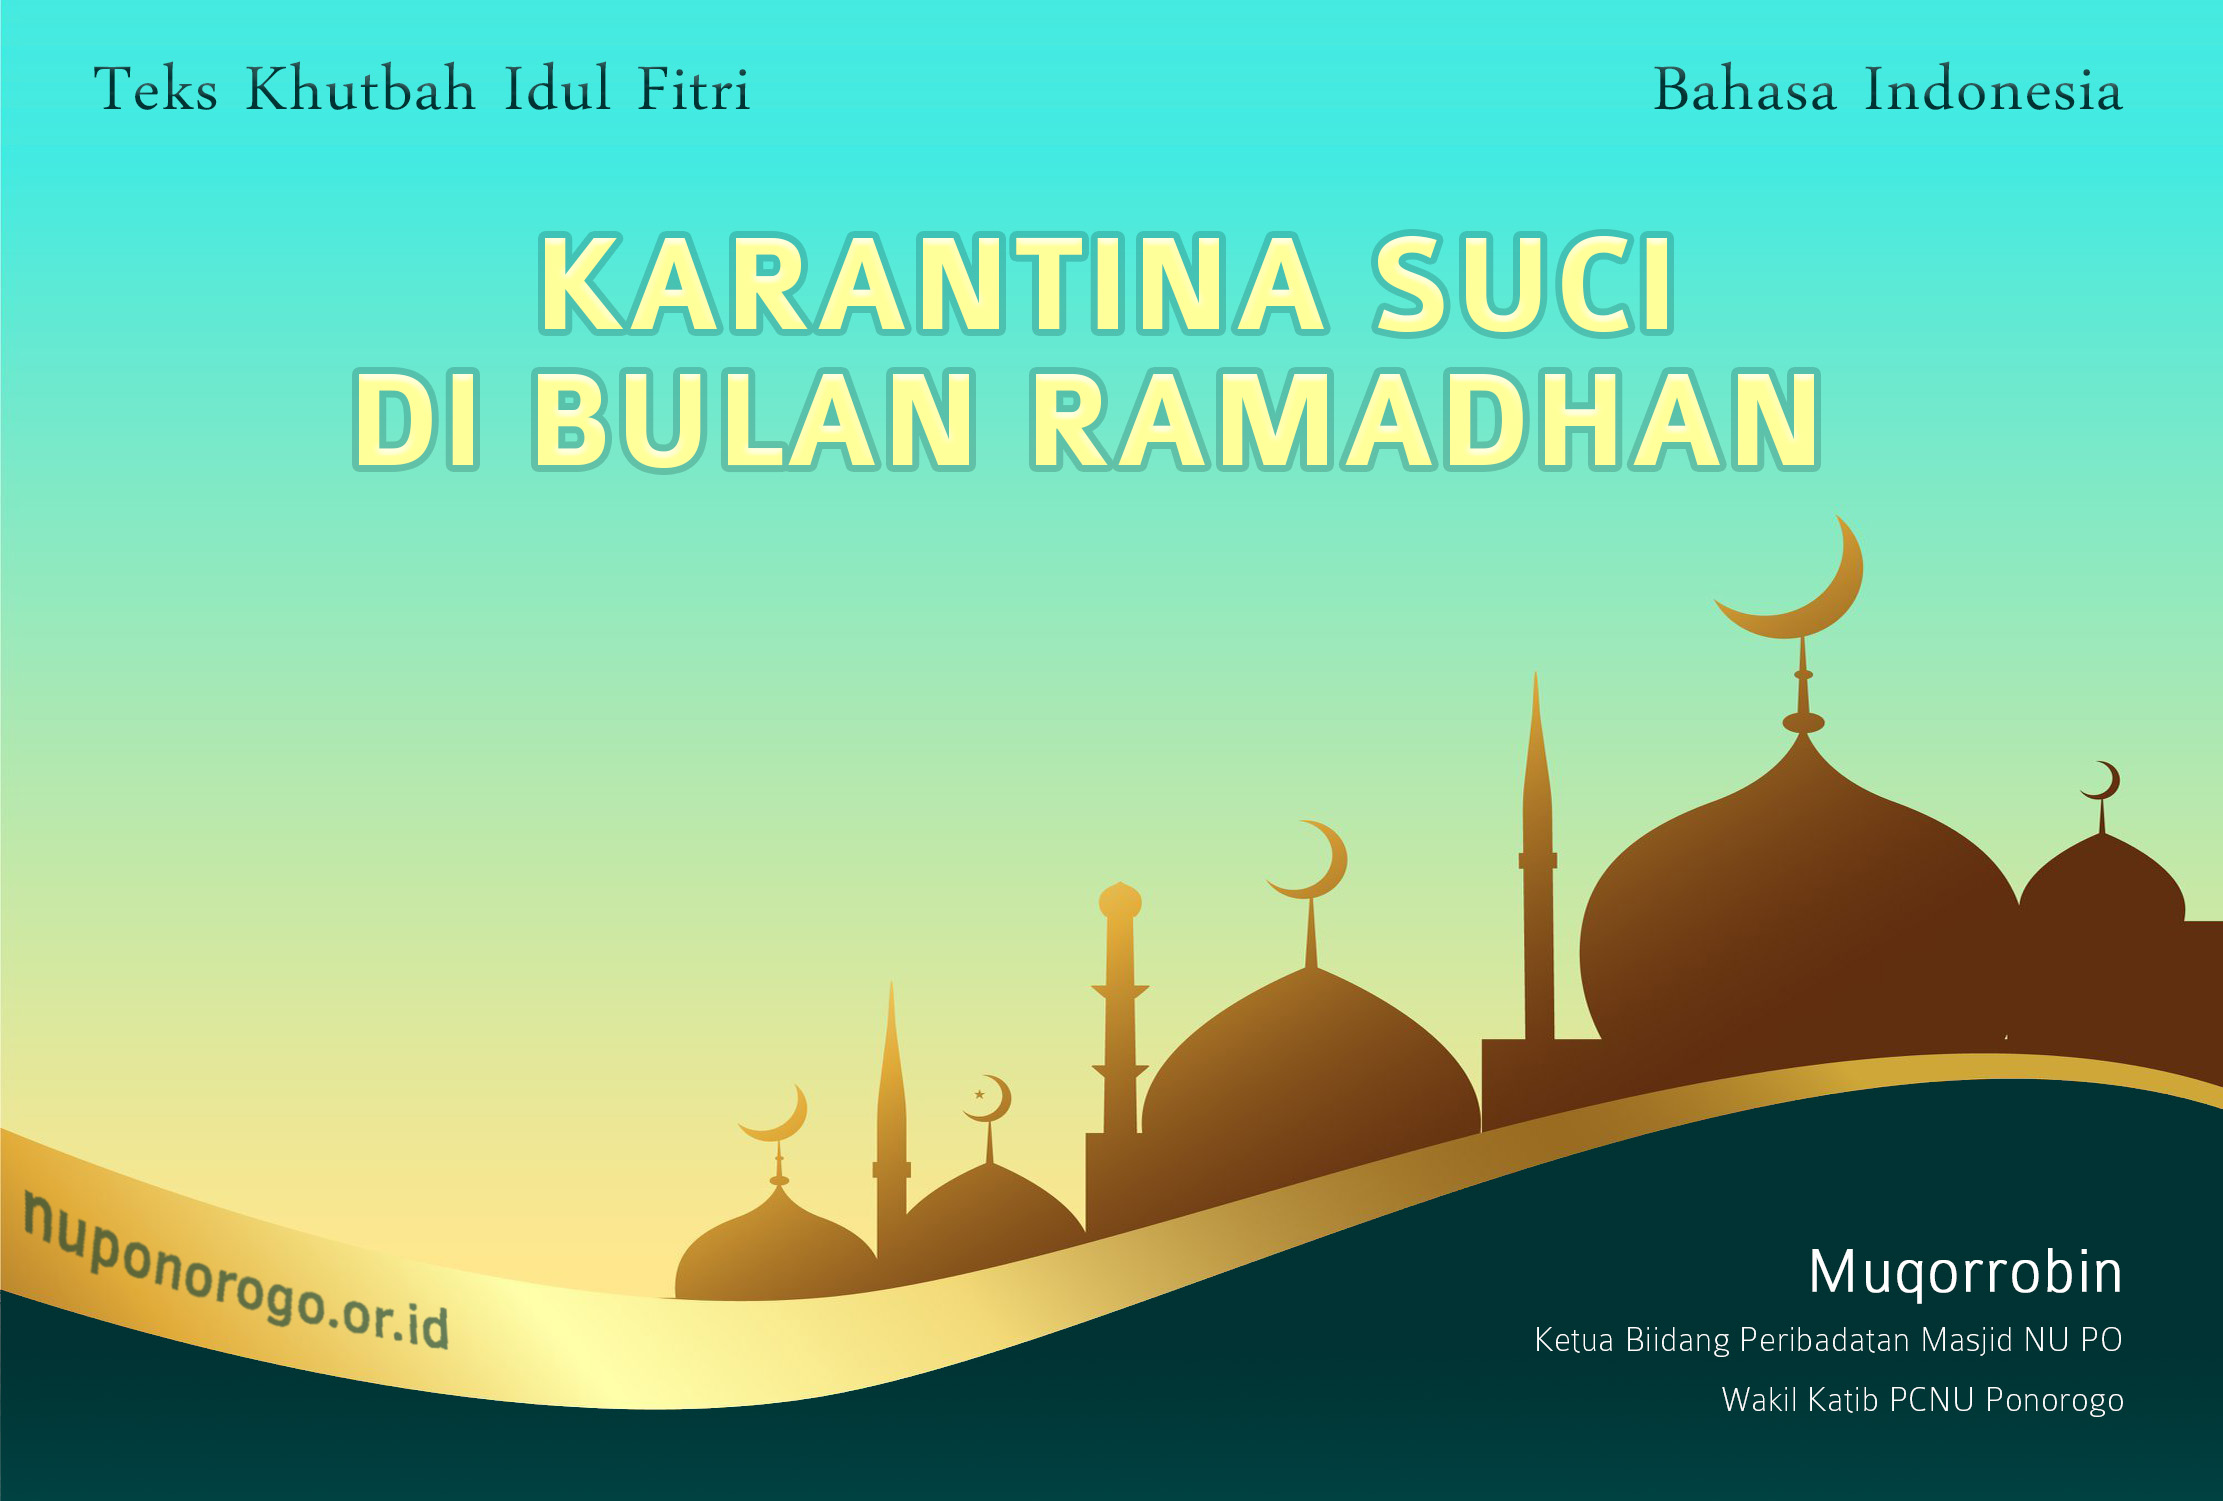 Teks Khutbah Idul Fitri Terbaru 2021 Bahasa Indonesia - Karantina Suci Di Bulan Ramadhan 